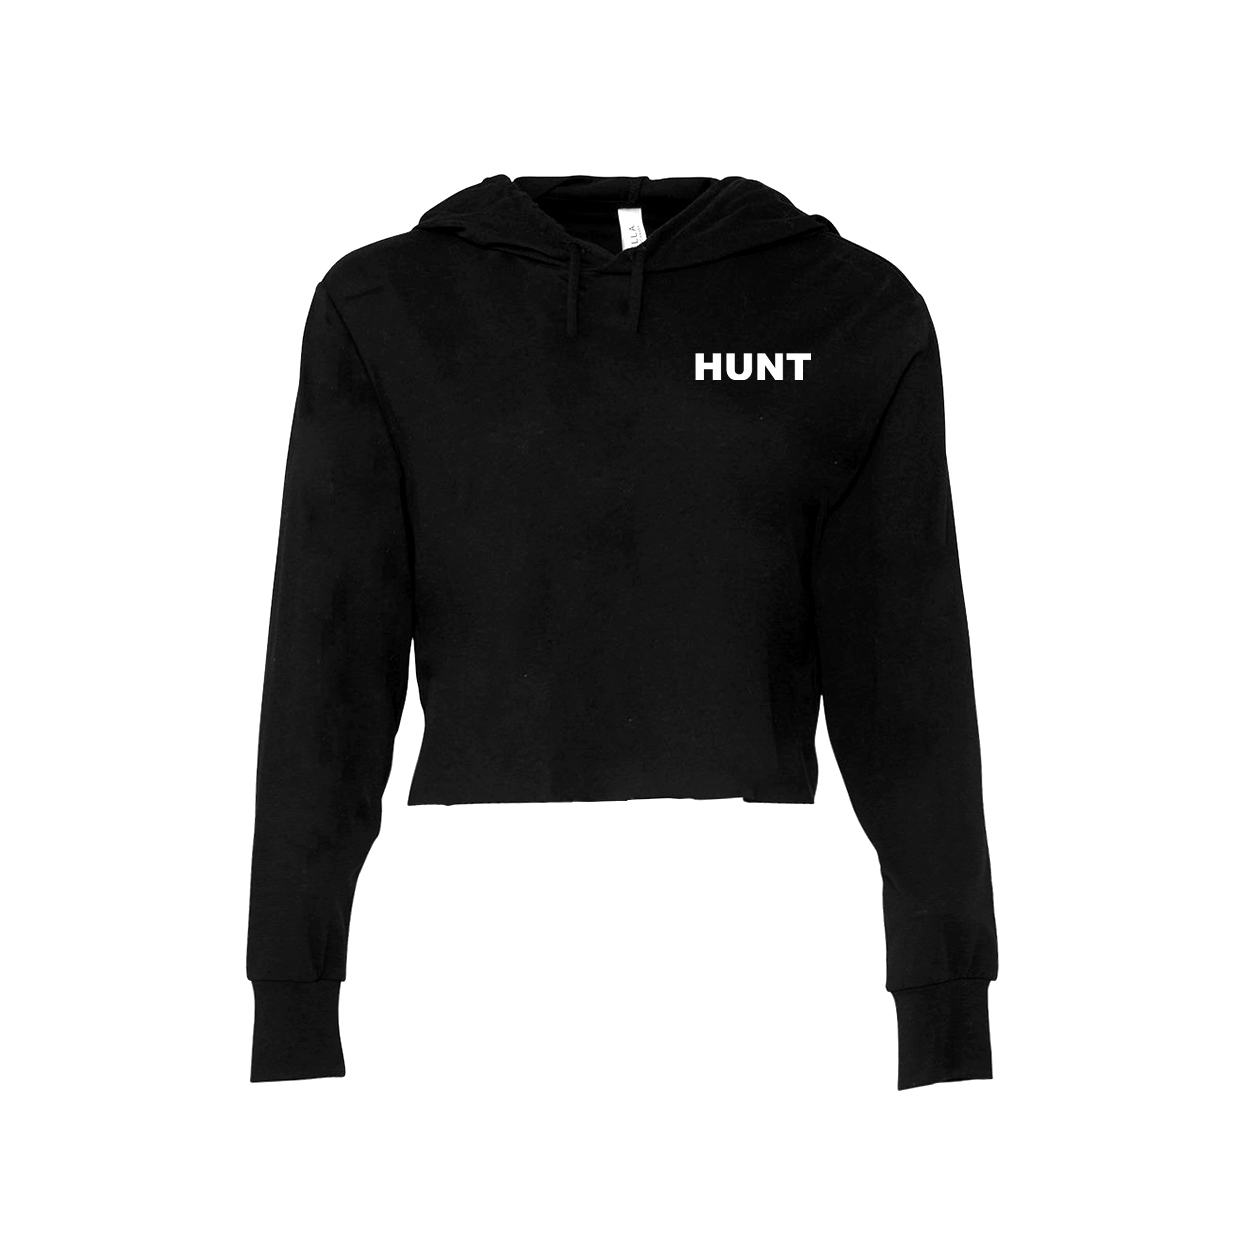 Hunt Brand Logo Night Out Womens Cropped Sweatshirt Black (White Logo)